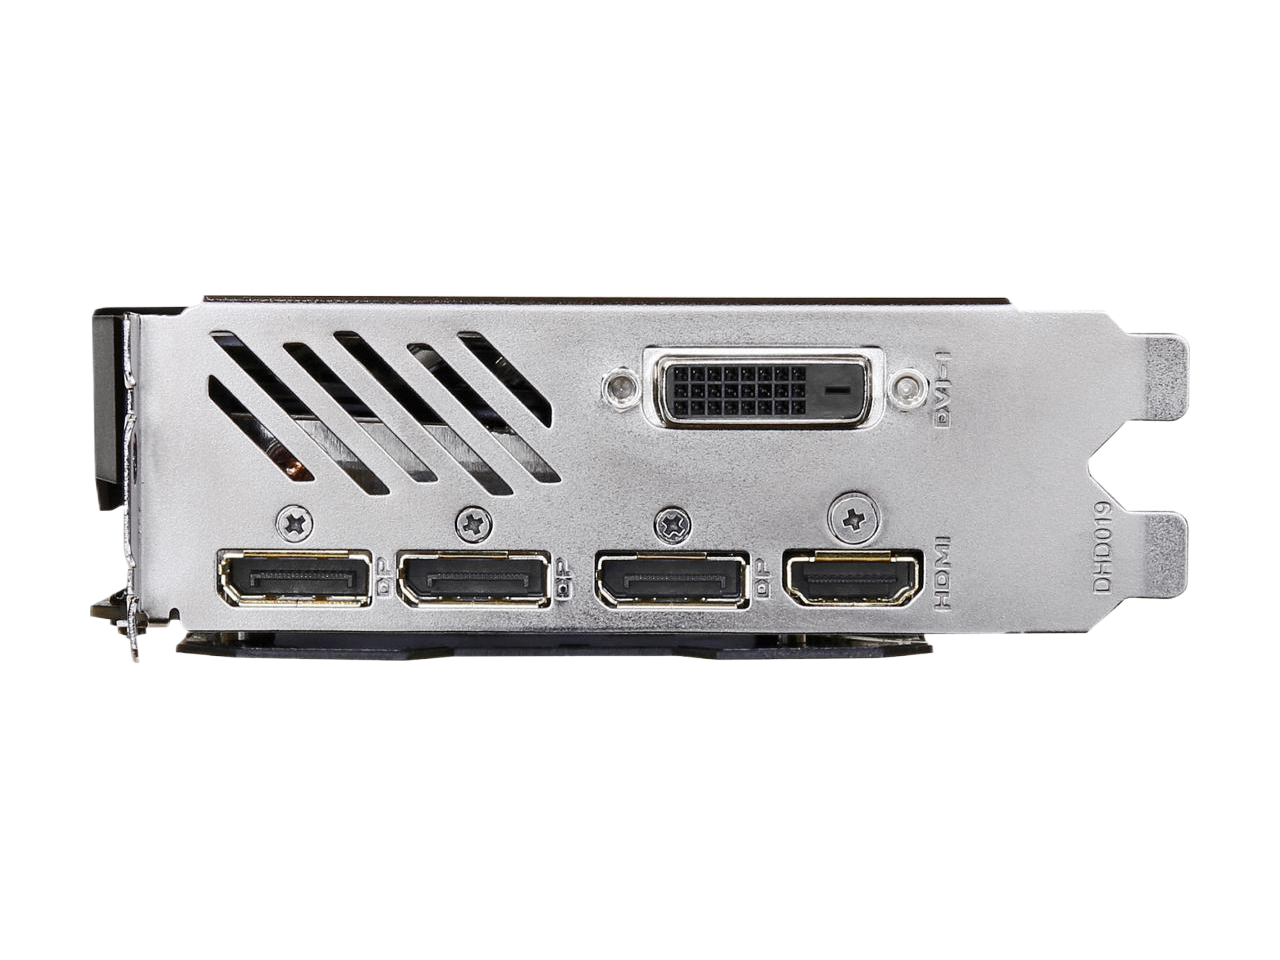 GIGABYTE GeForce GTX 1070 Ti 8GB GDDR5 PCI Express 3.0 x16 SLI Support ATX Video Card GV-N107TGAMING-8GD